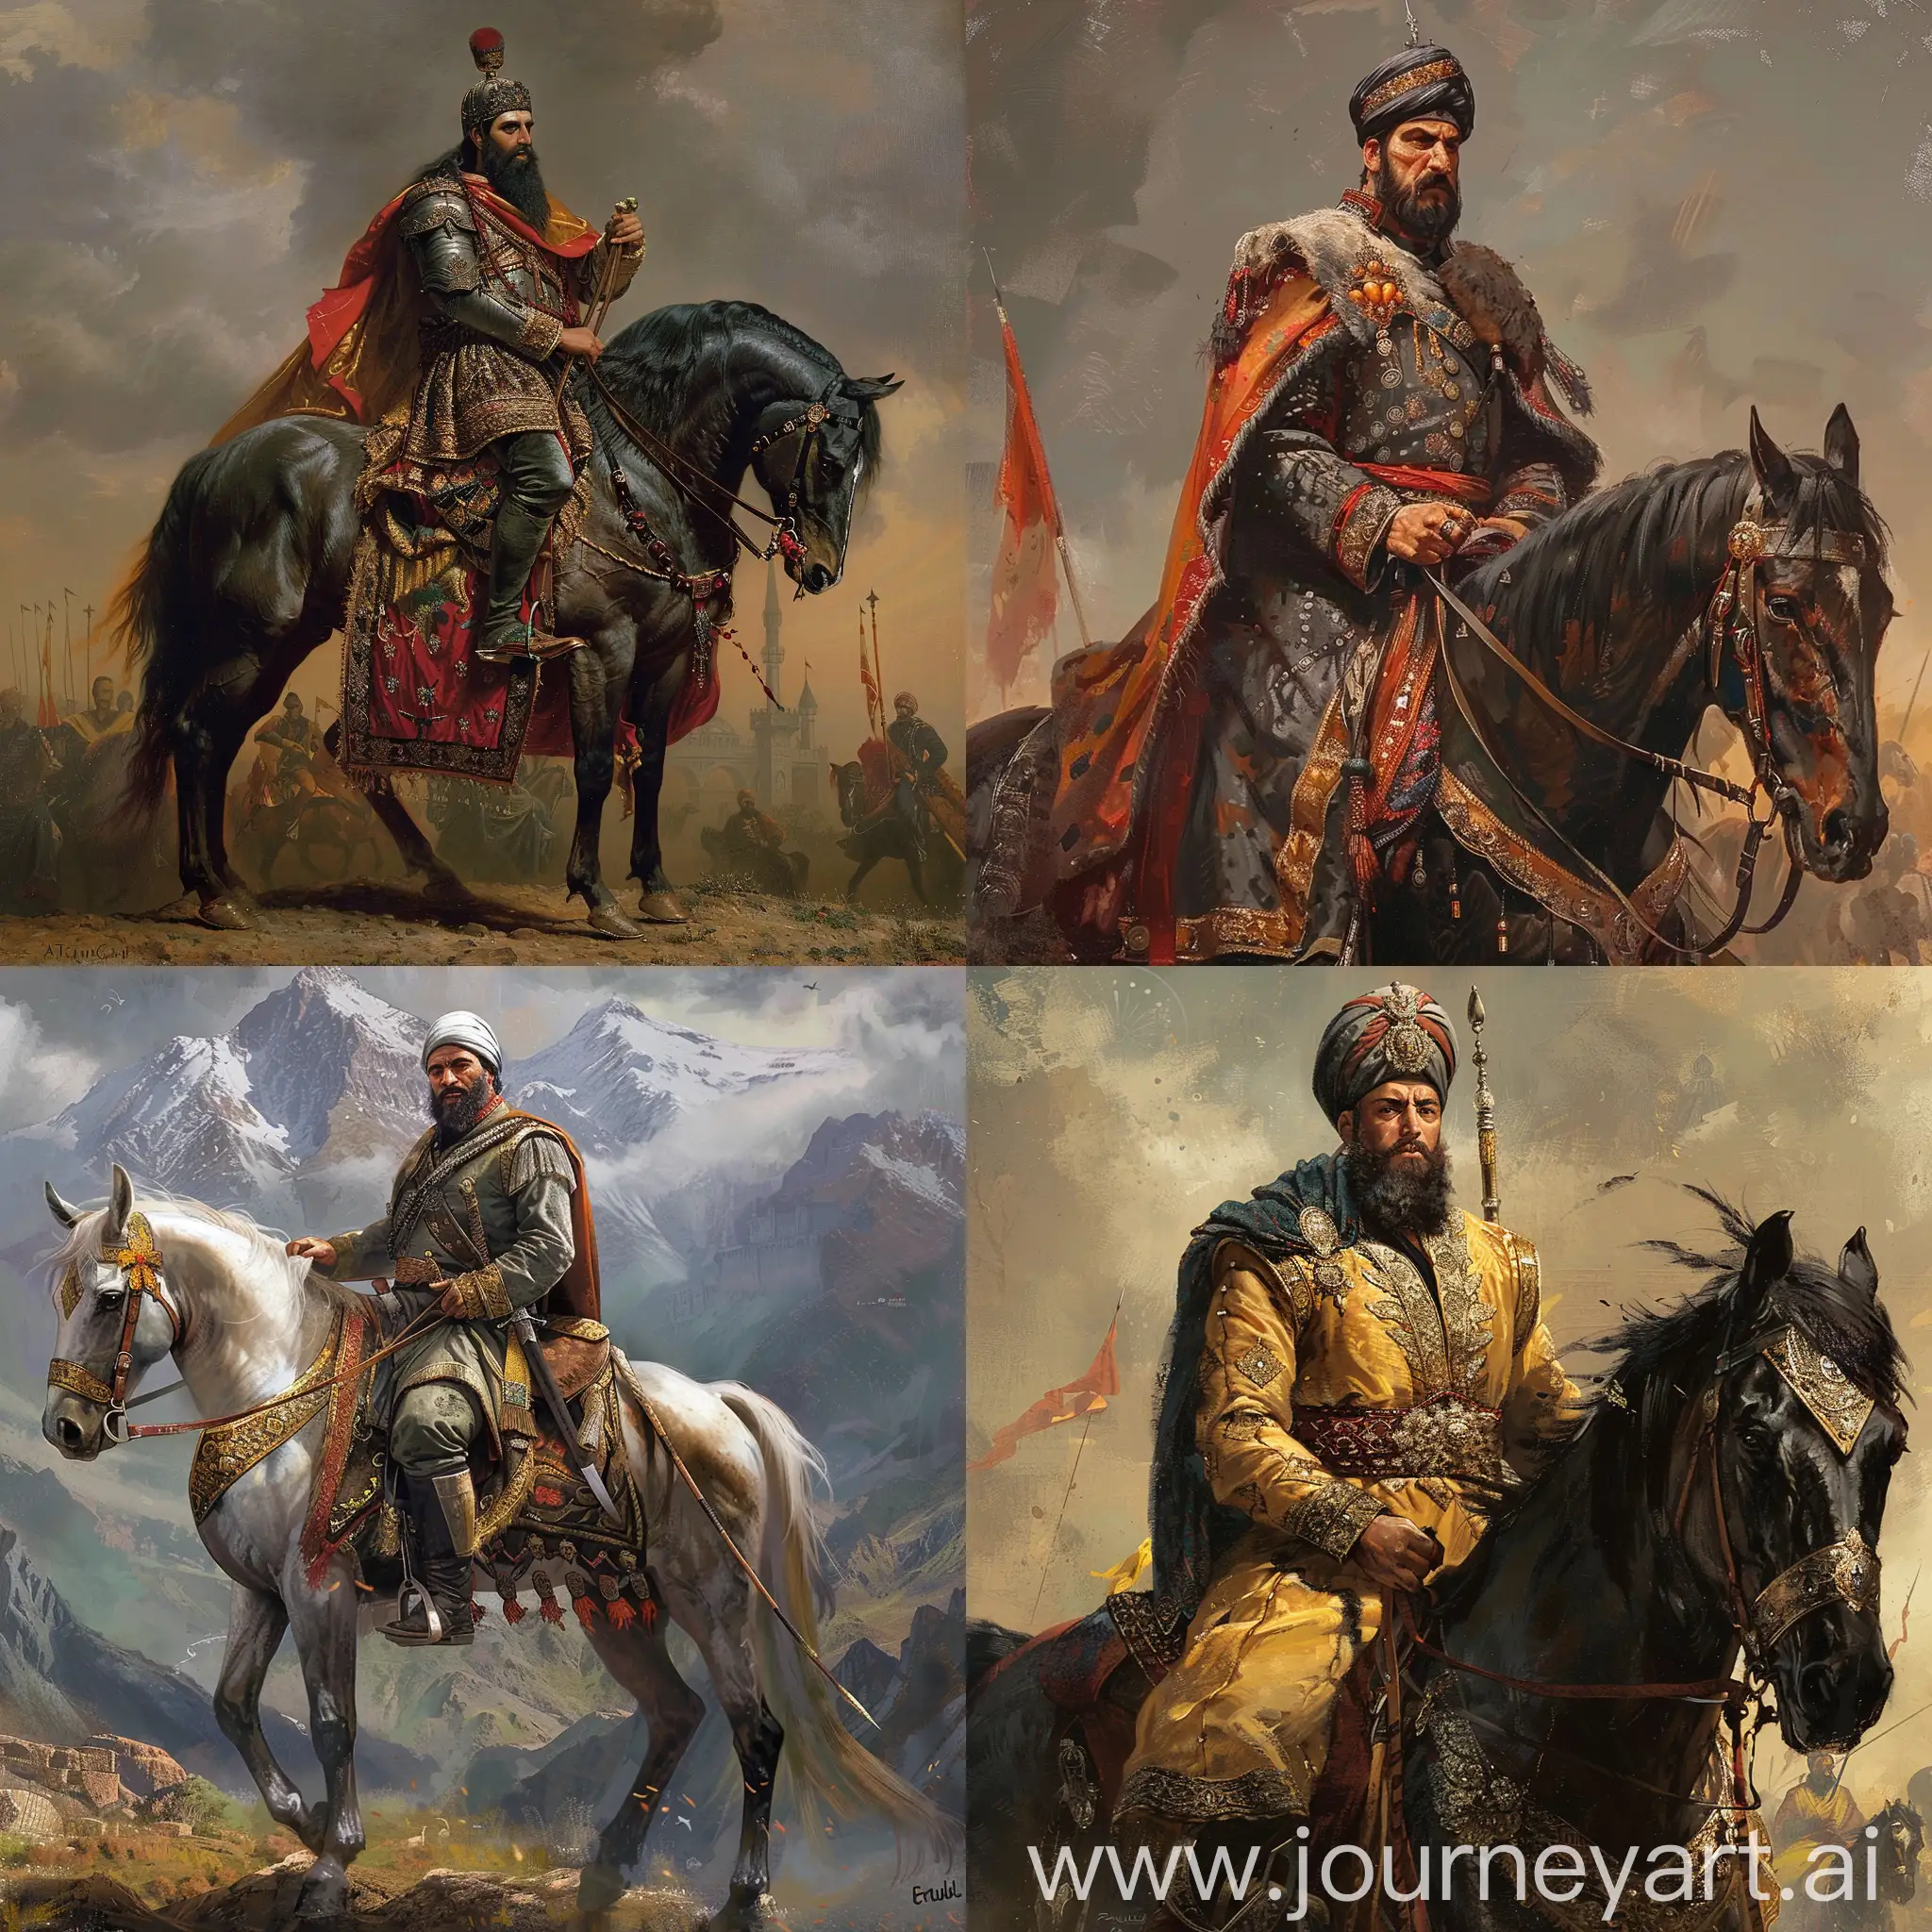 Erturul-Ghazi-Riding-Majestically-on-His-Horse